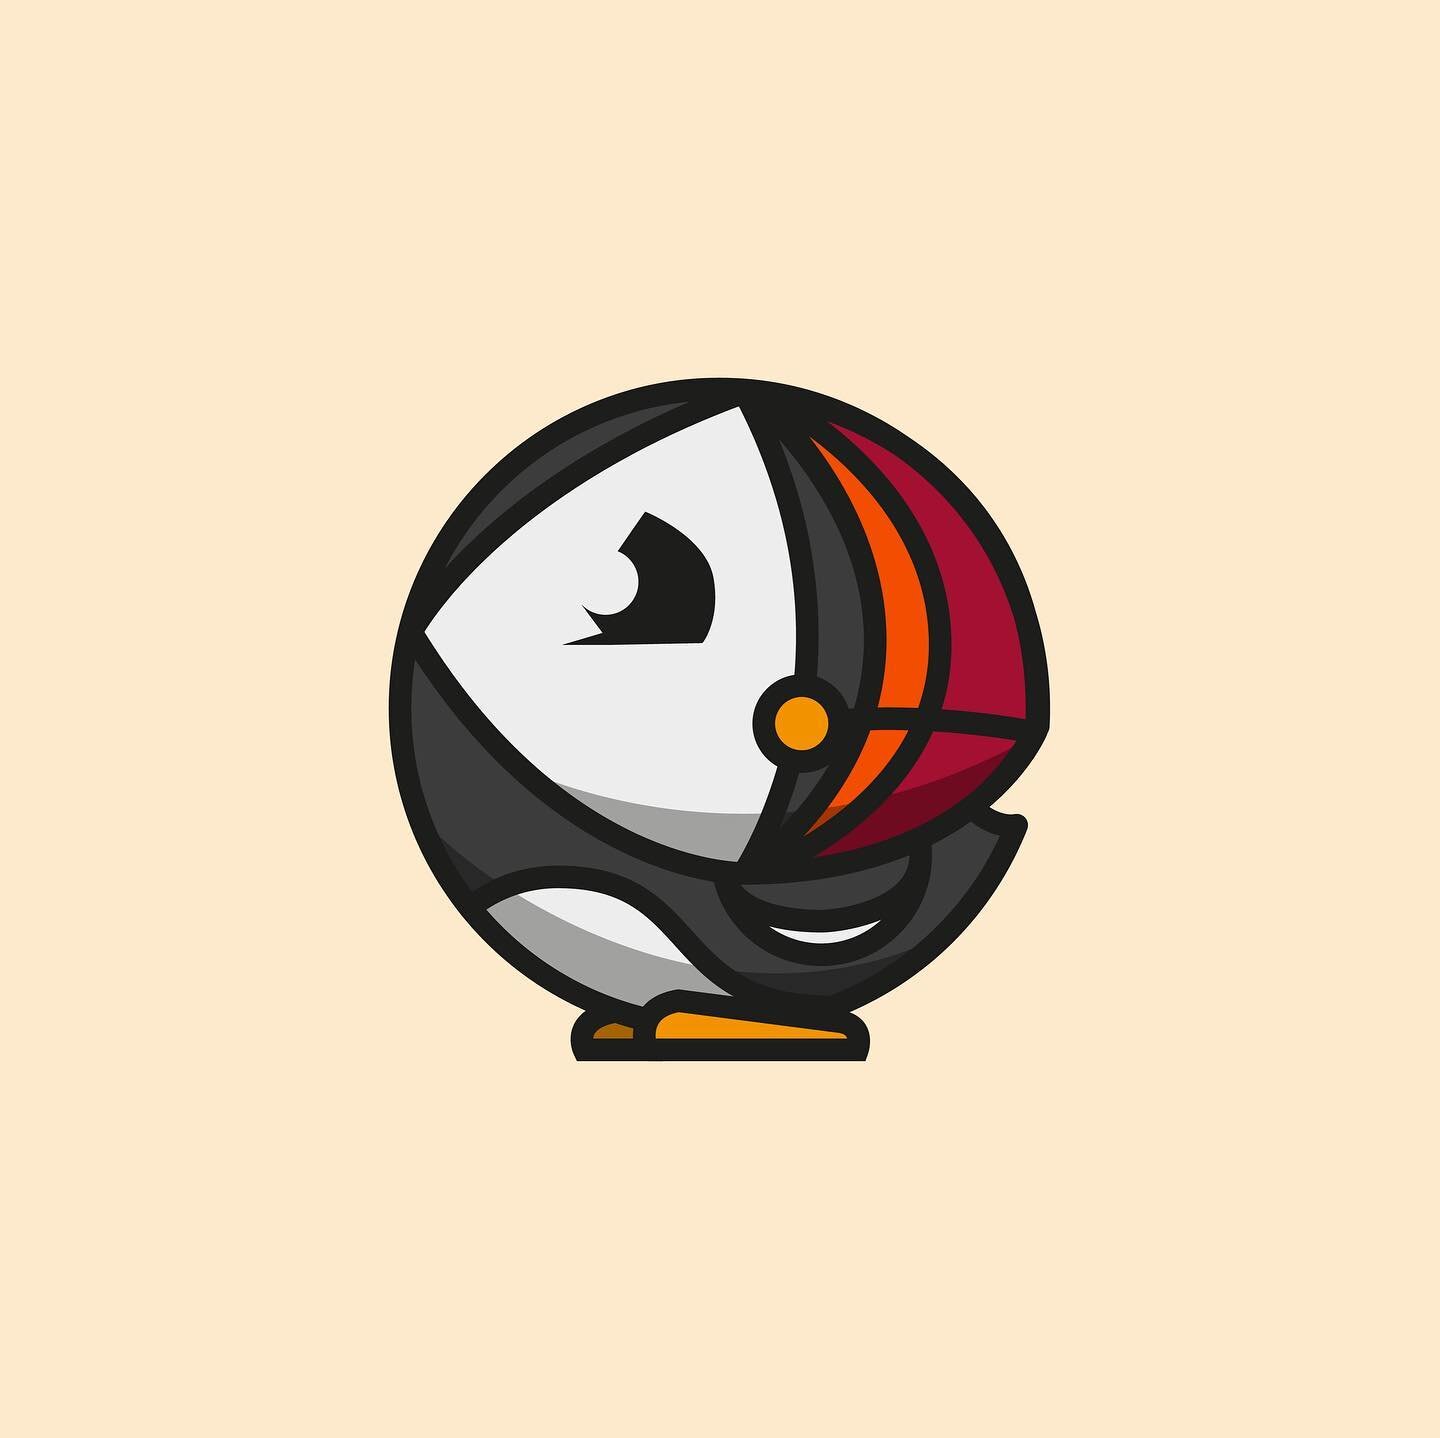 Little puffin illustration &middot;
&middot;
&middot;
&middot;
&middot;
&middot;
&middot;
&middot;
&middot;
&middot;
&middot;
&middot;
&middot;
&middot;
&middot;
#ornithology #fraterculaarctica #atlanticpuffin #puffin #illustration #birds #art #bird 